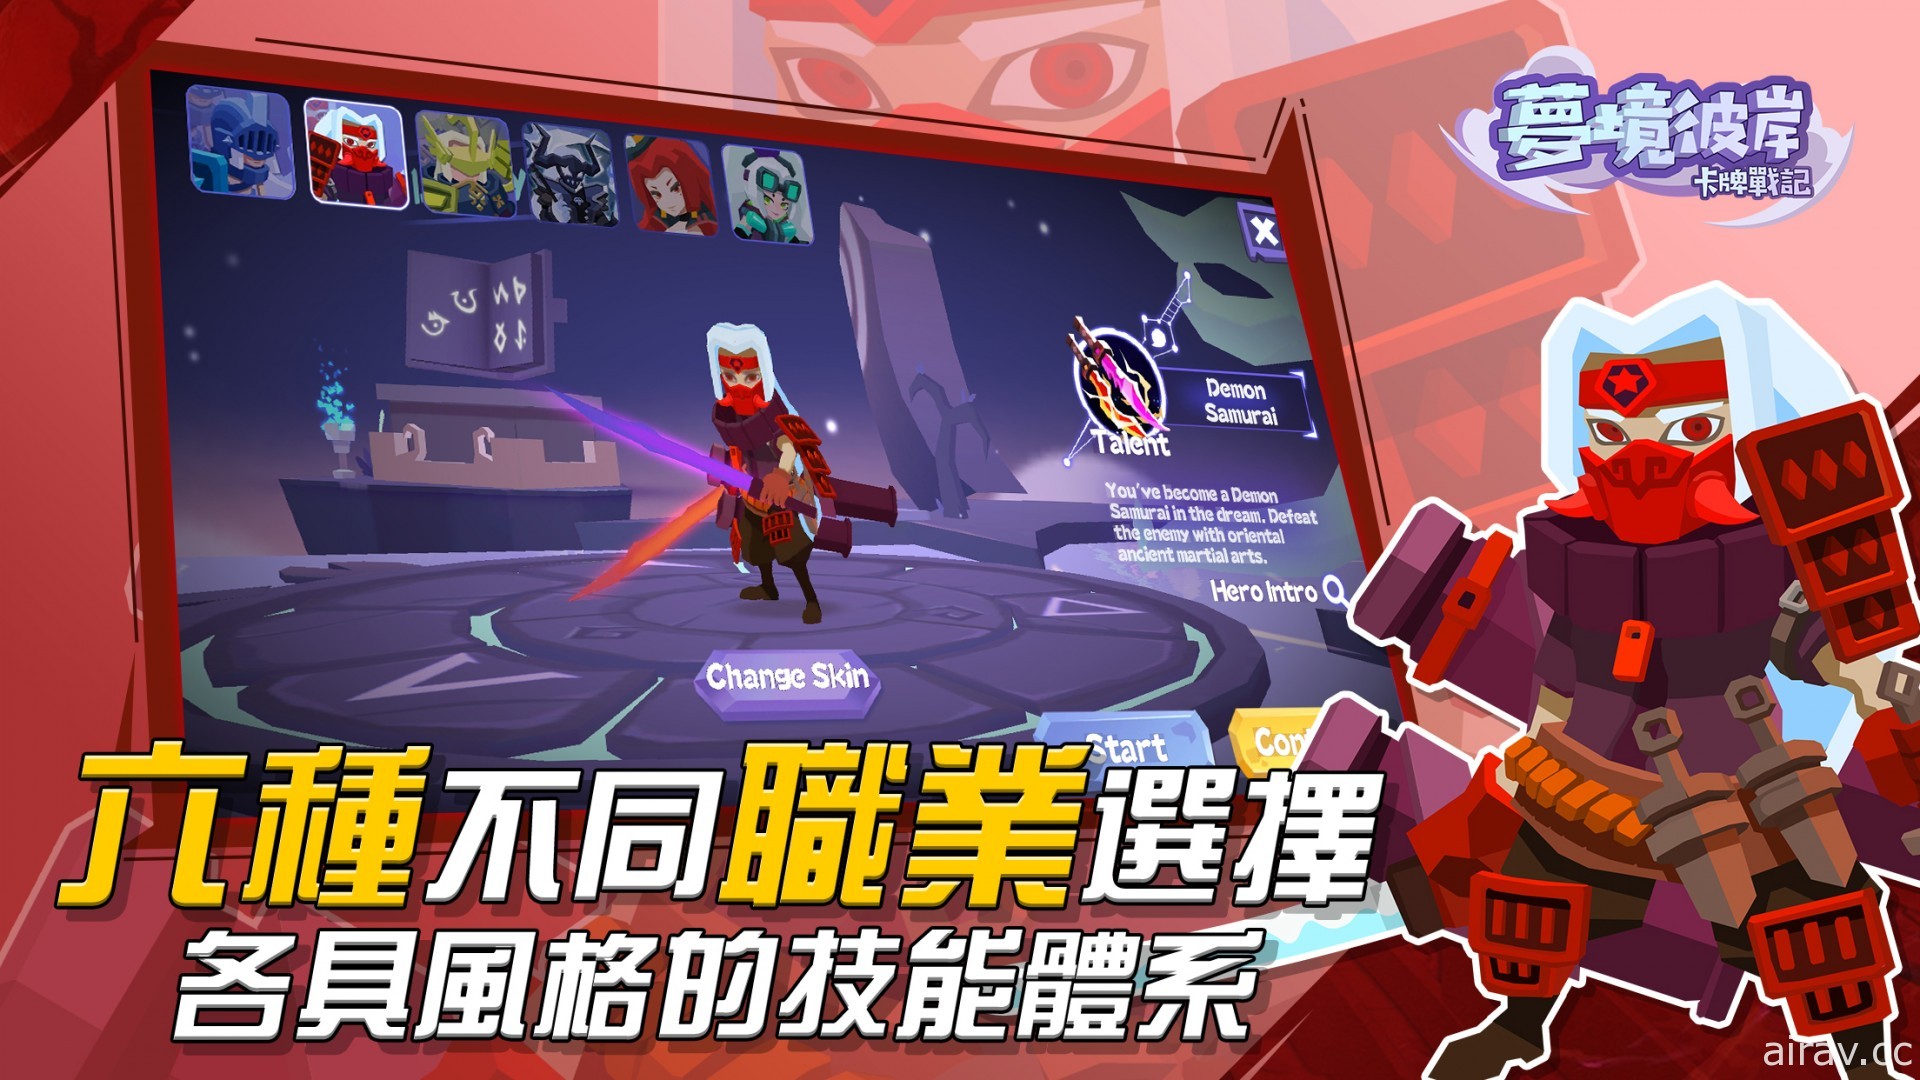 Roguelike 卡牌冒险游戏《梦境彼岸：卡牌战记》iOS 版上线 在梦境中挑战敌人